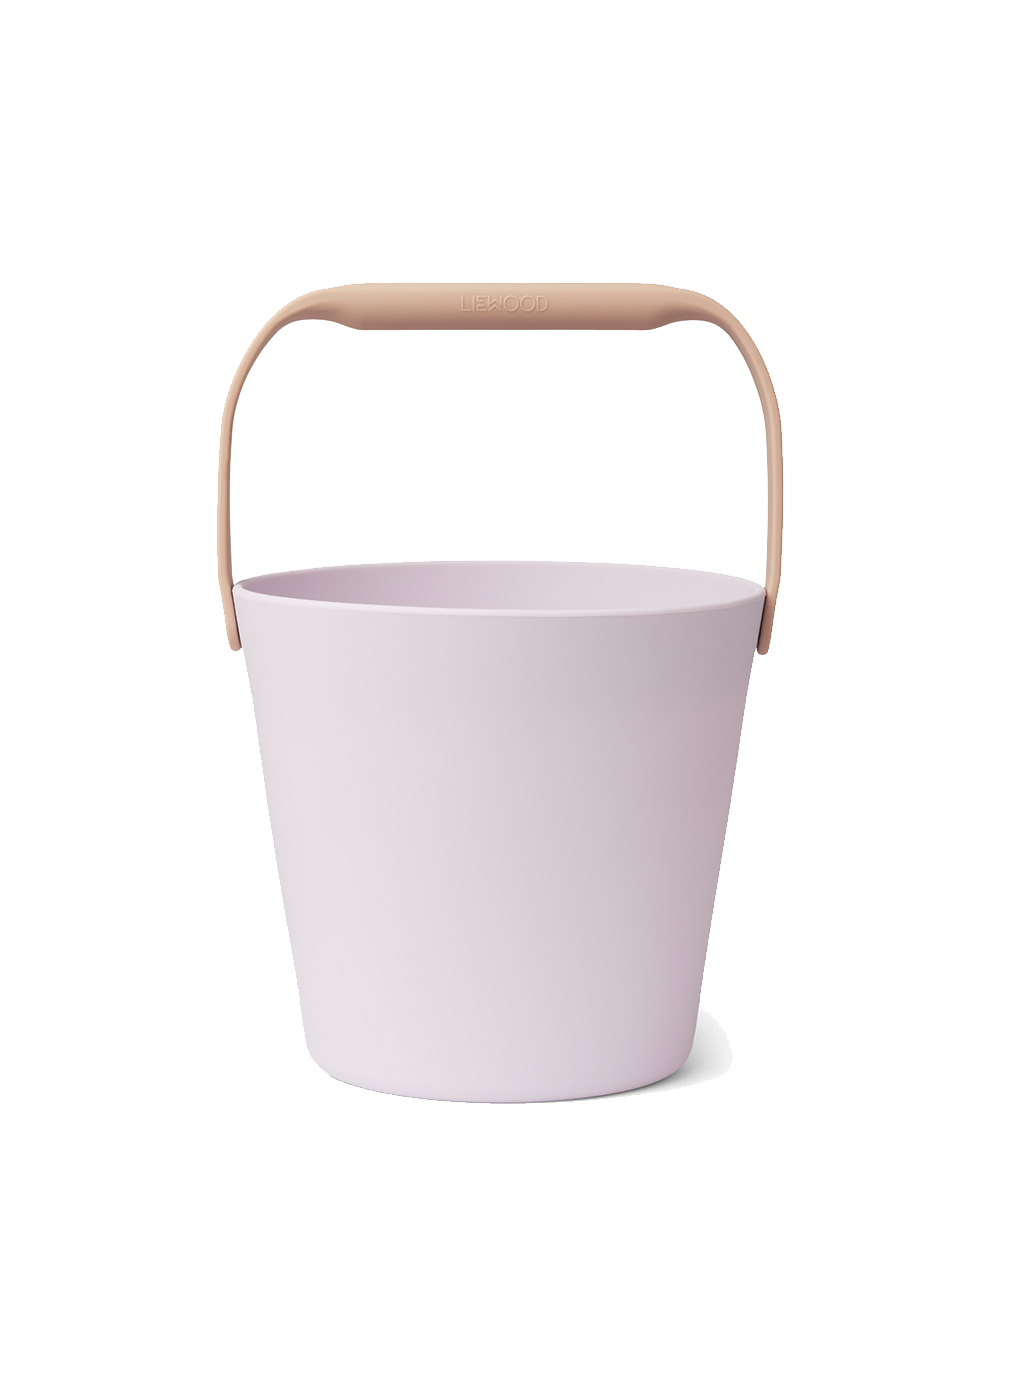 silicone bucket